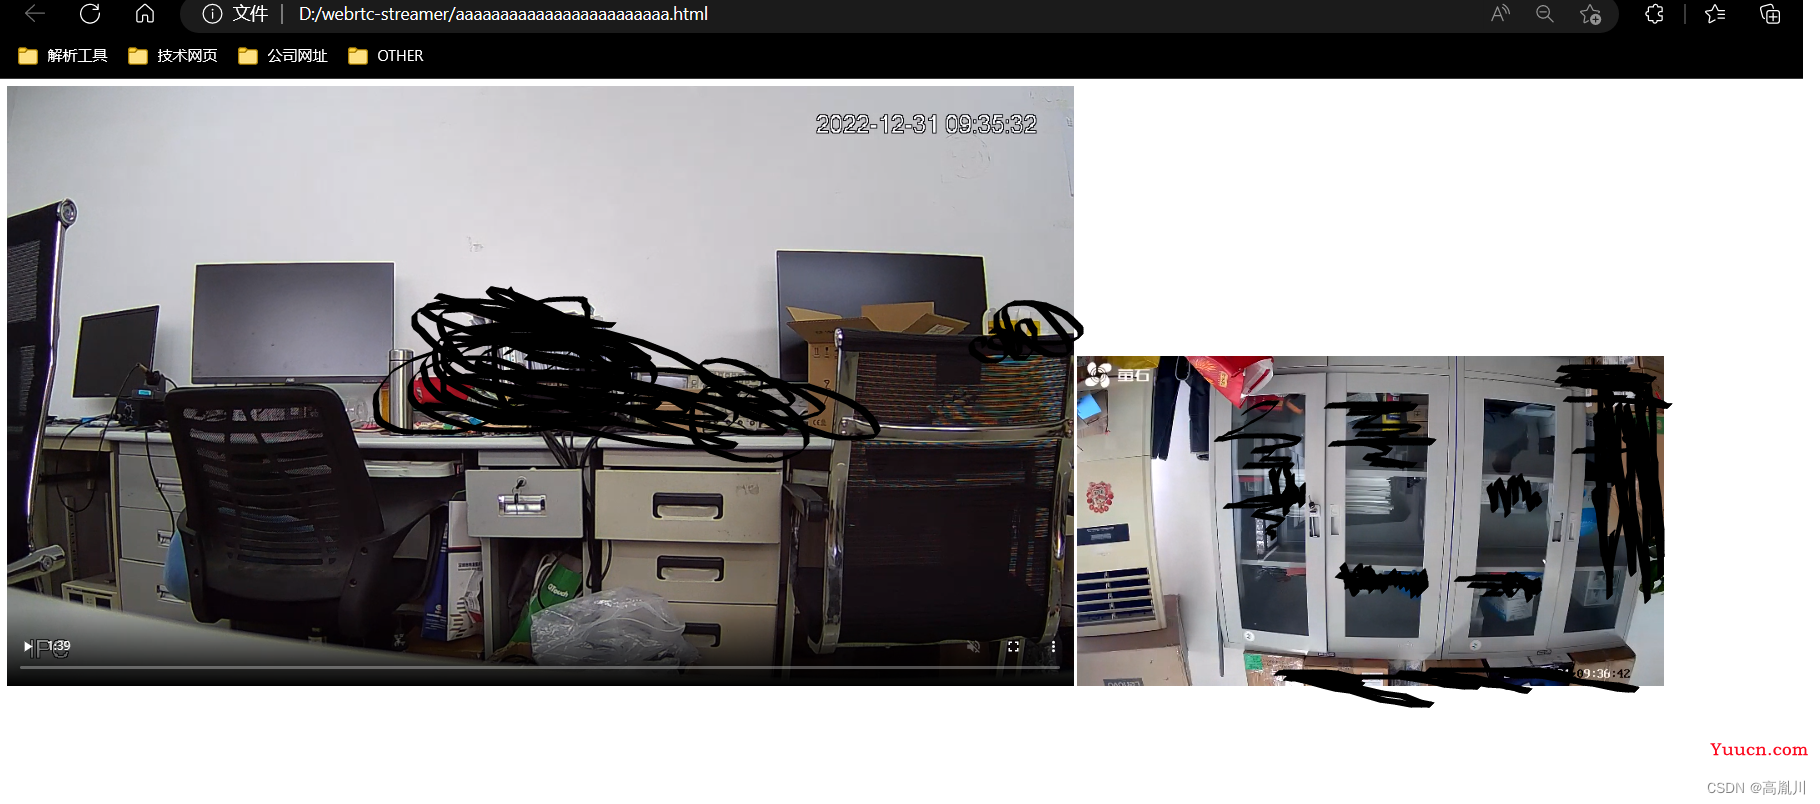 webrtc streamer&前端页面js播放摄像头rtsp流